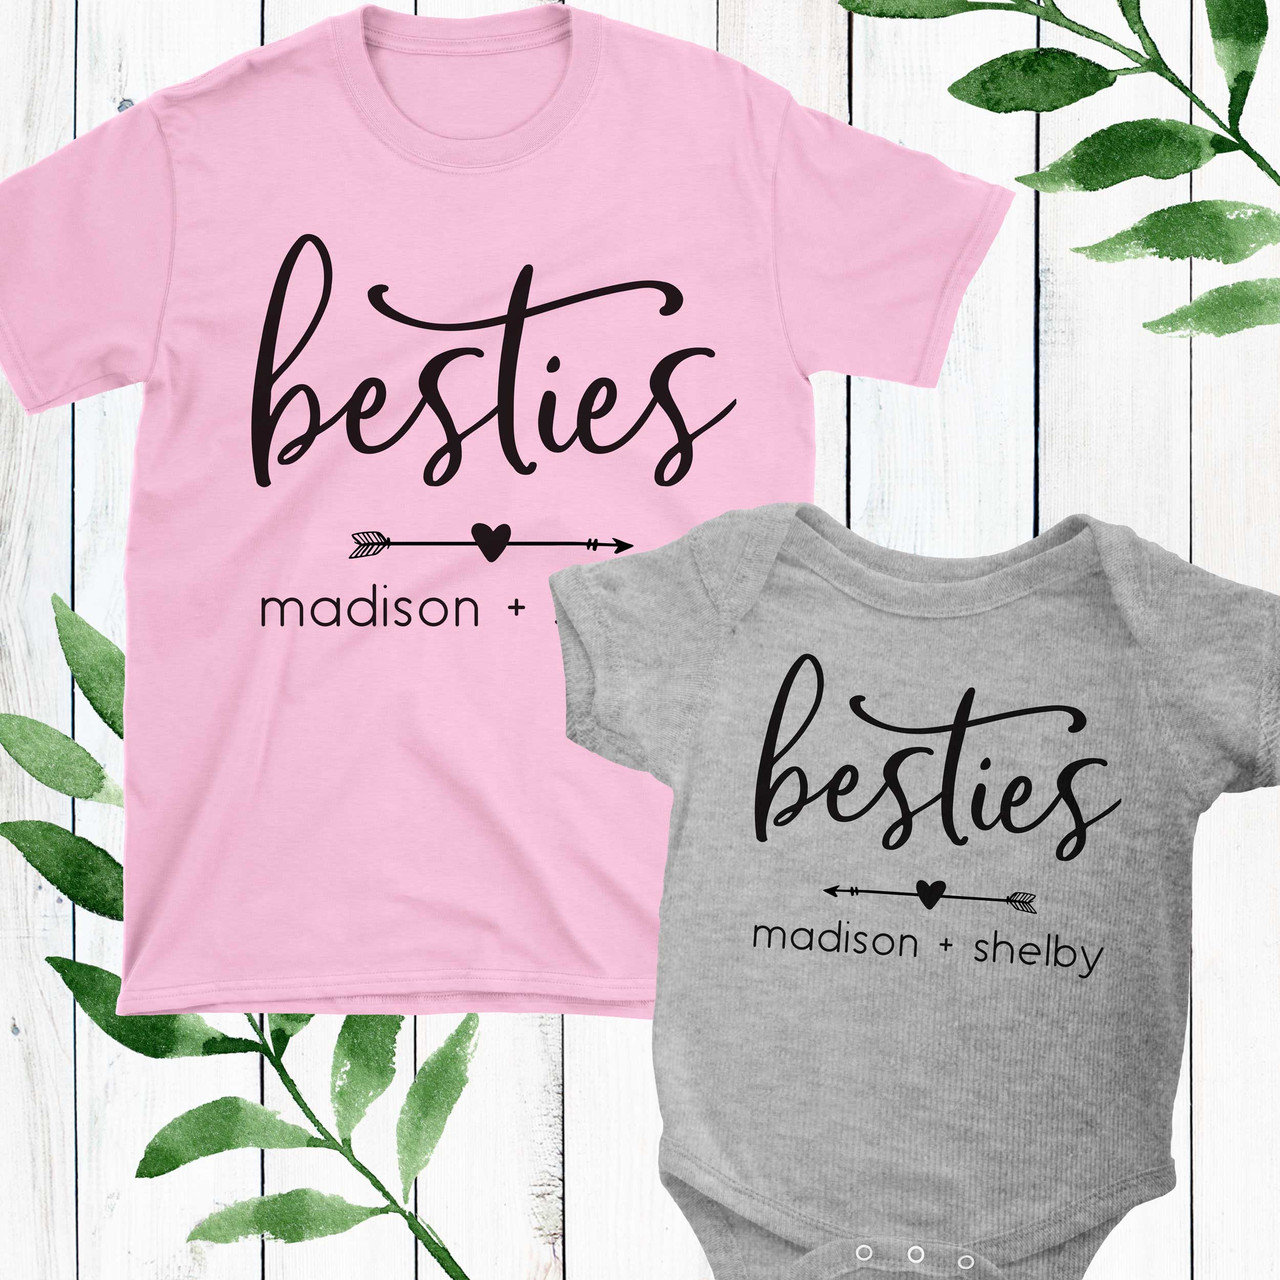 Best Friend Shirts Girls Trip Shirts Matching Shirts Shirts for